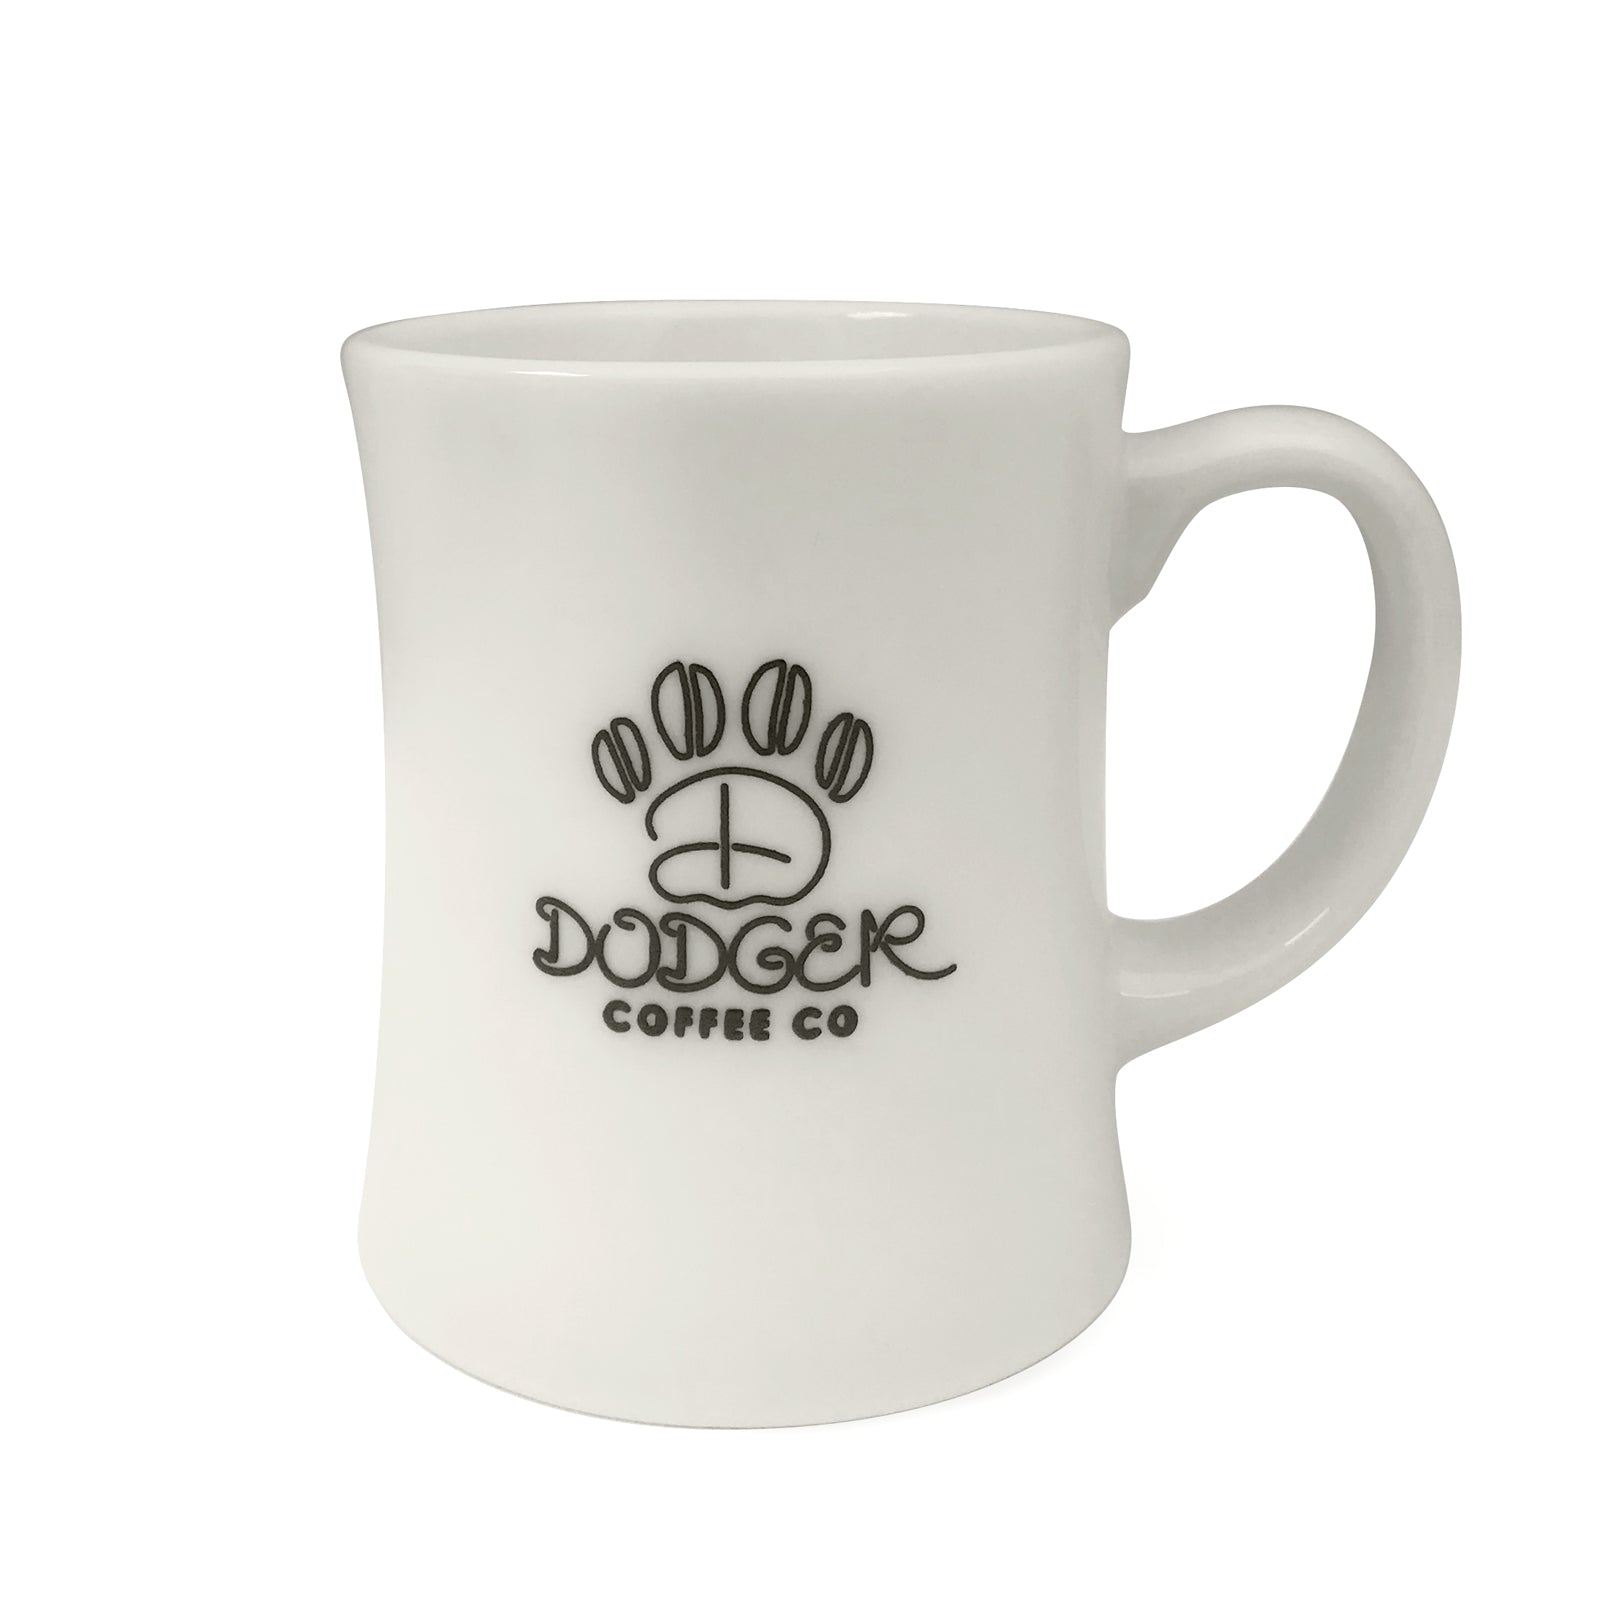 Corkcicle White Los Angeles Dodgers 16oz. Primary Logo Mug